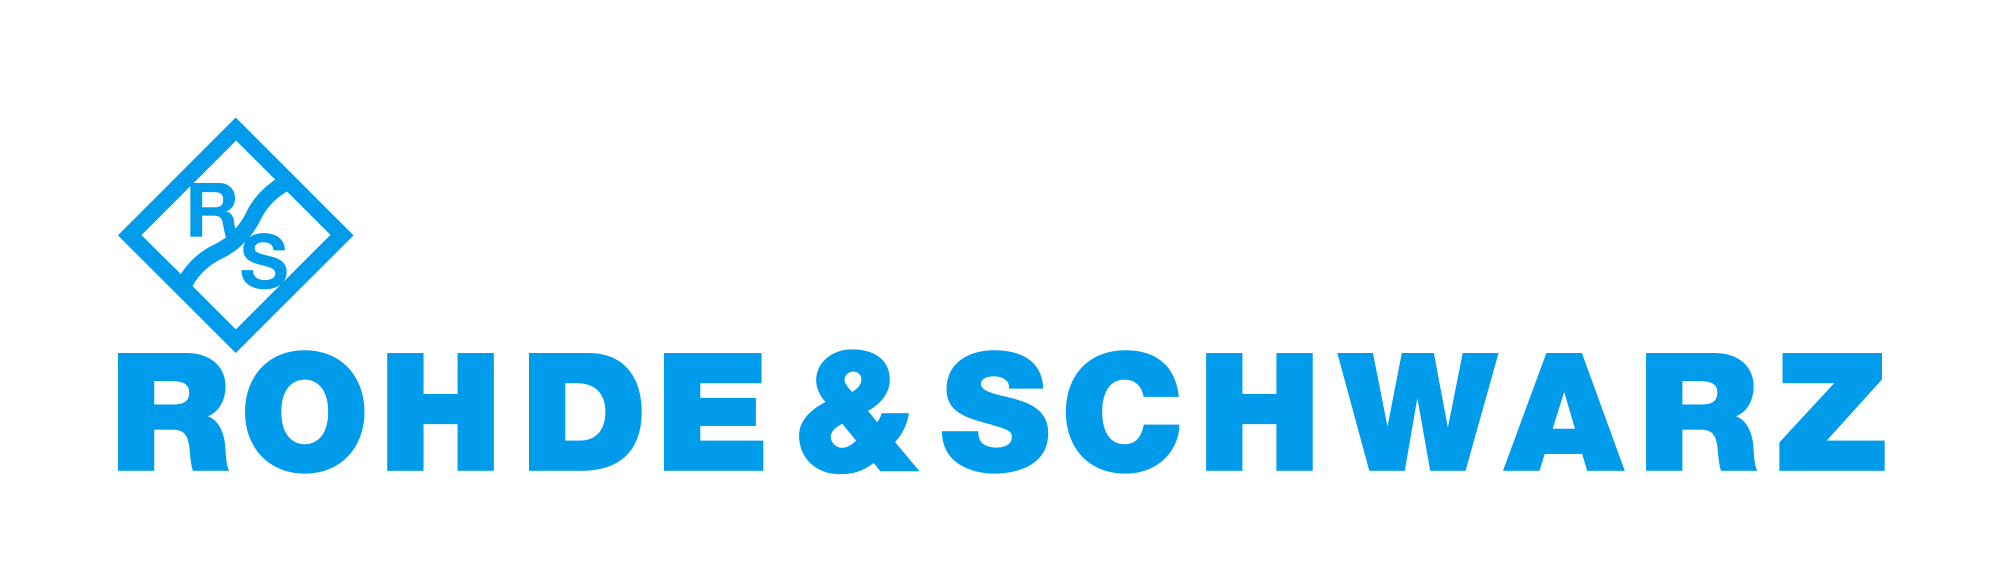 rohdeschwarz_logo